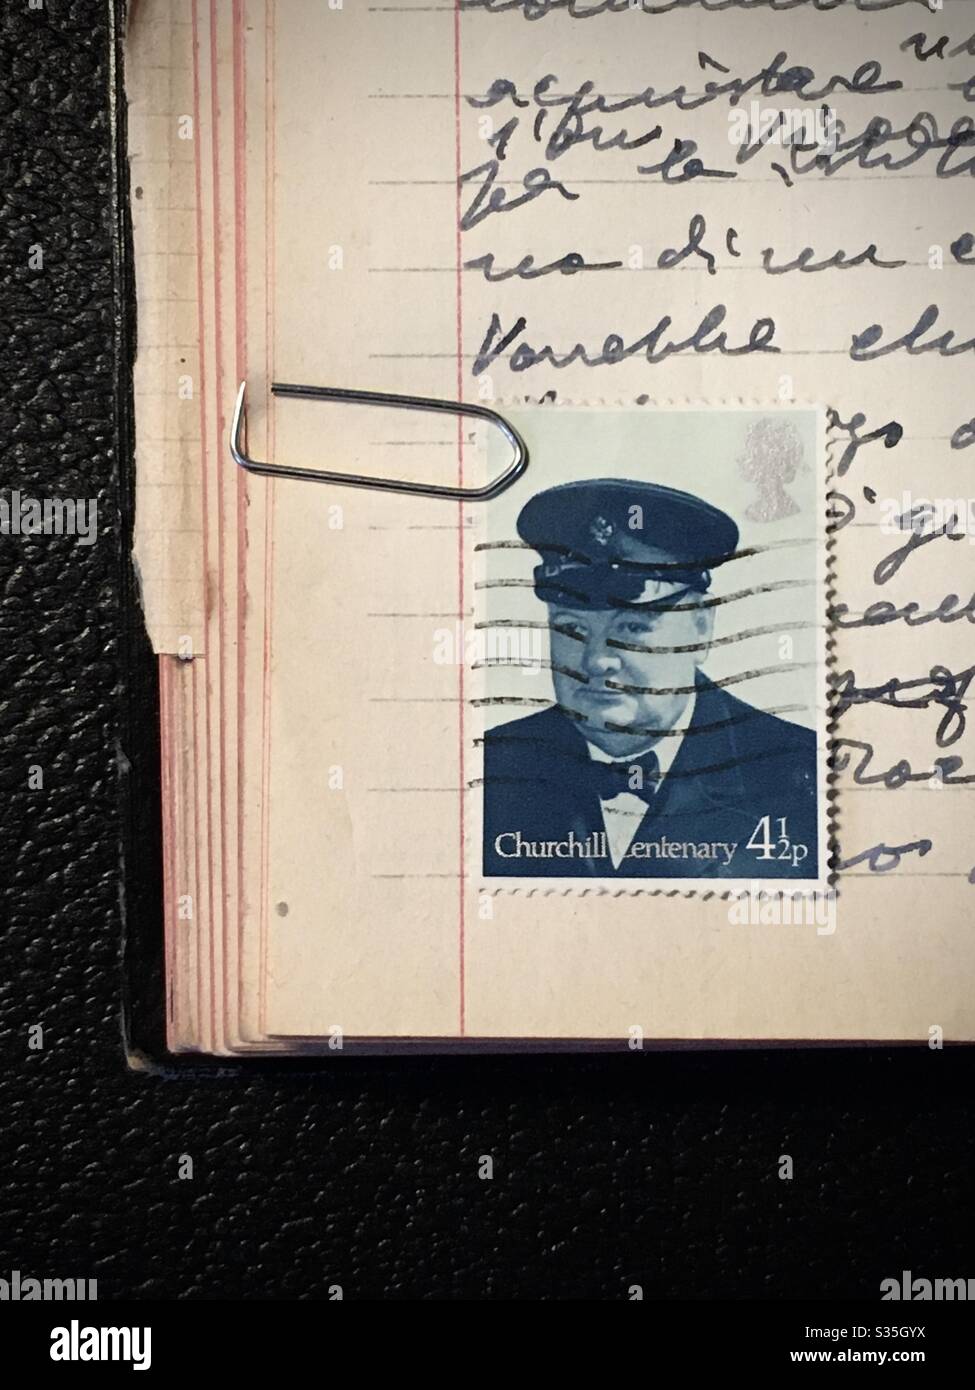 Winston Churchill commemorative stamp on a notebook hand written Stock Photo